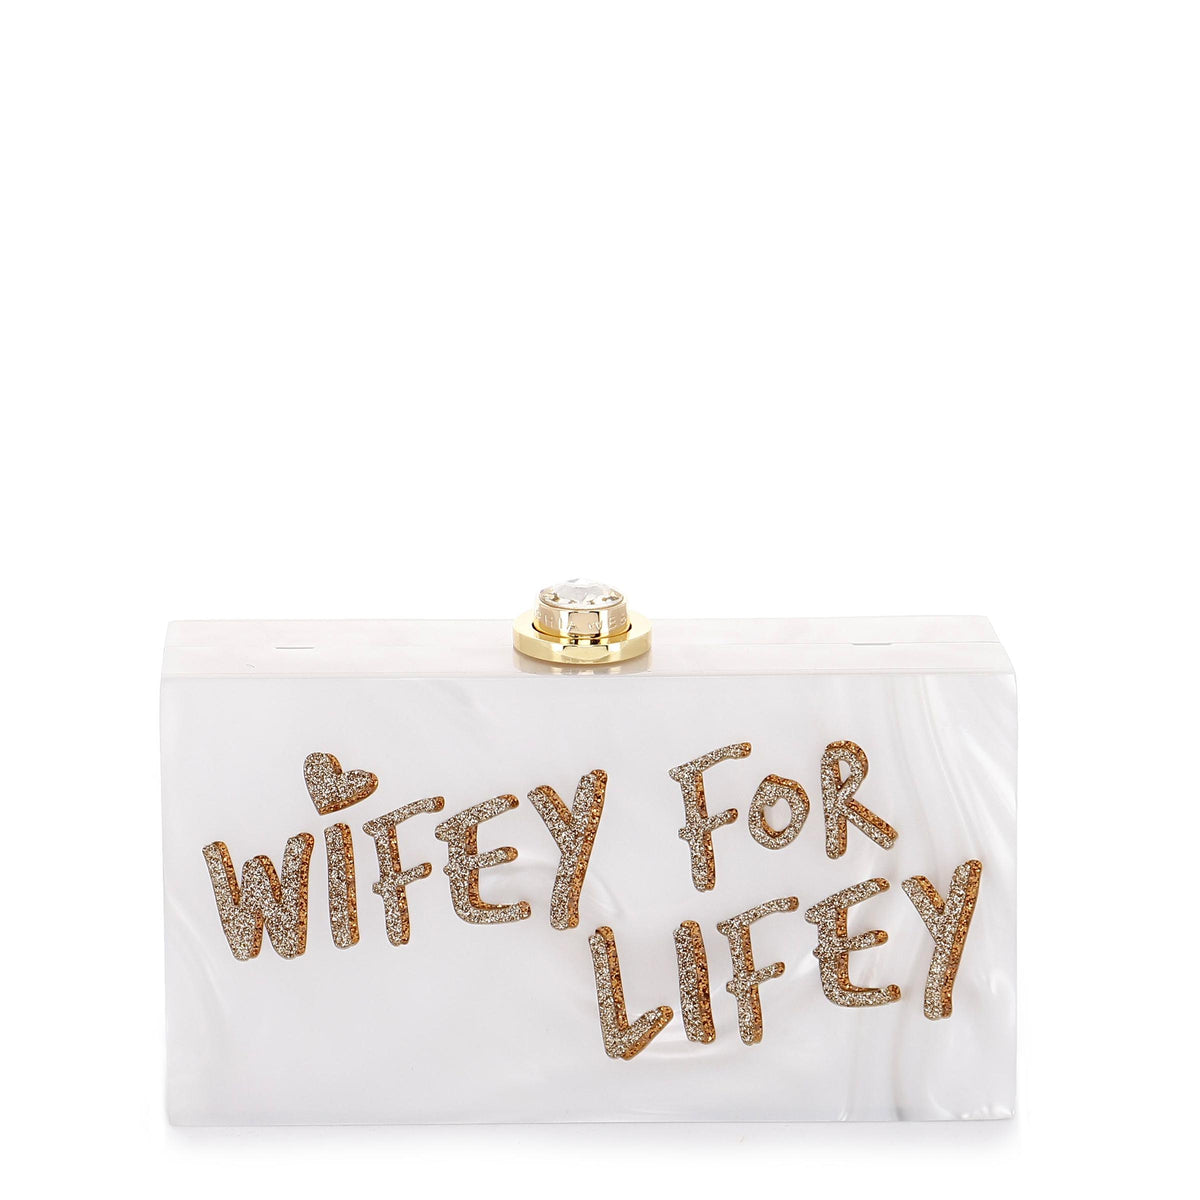 Wifey for Lifey Clutch in White